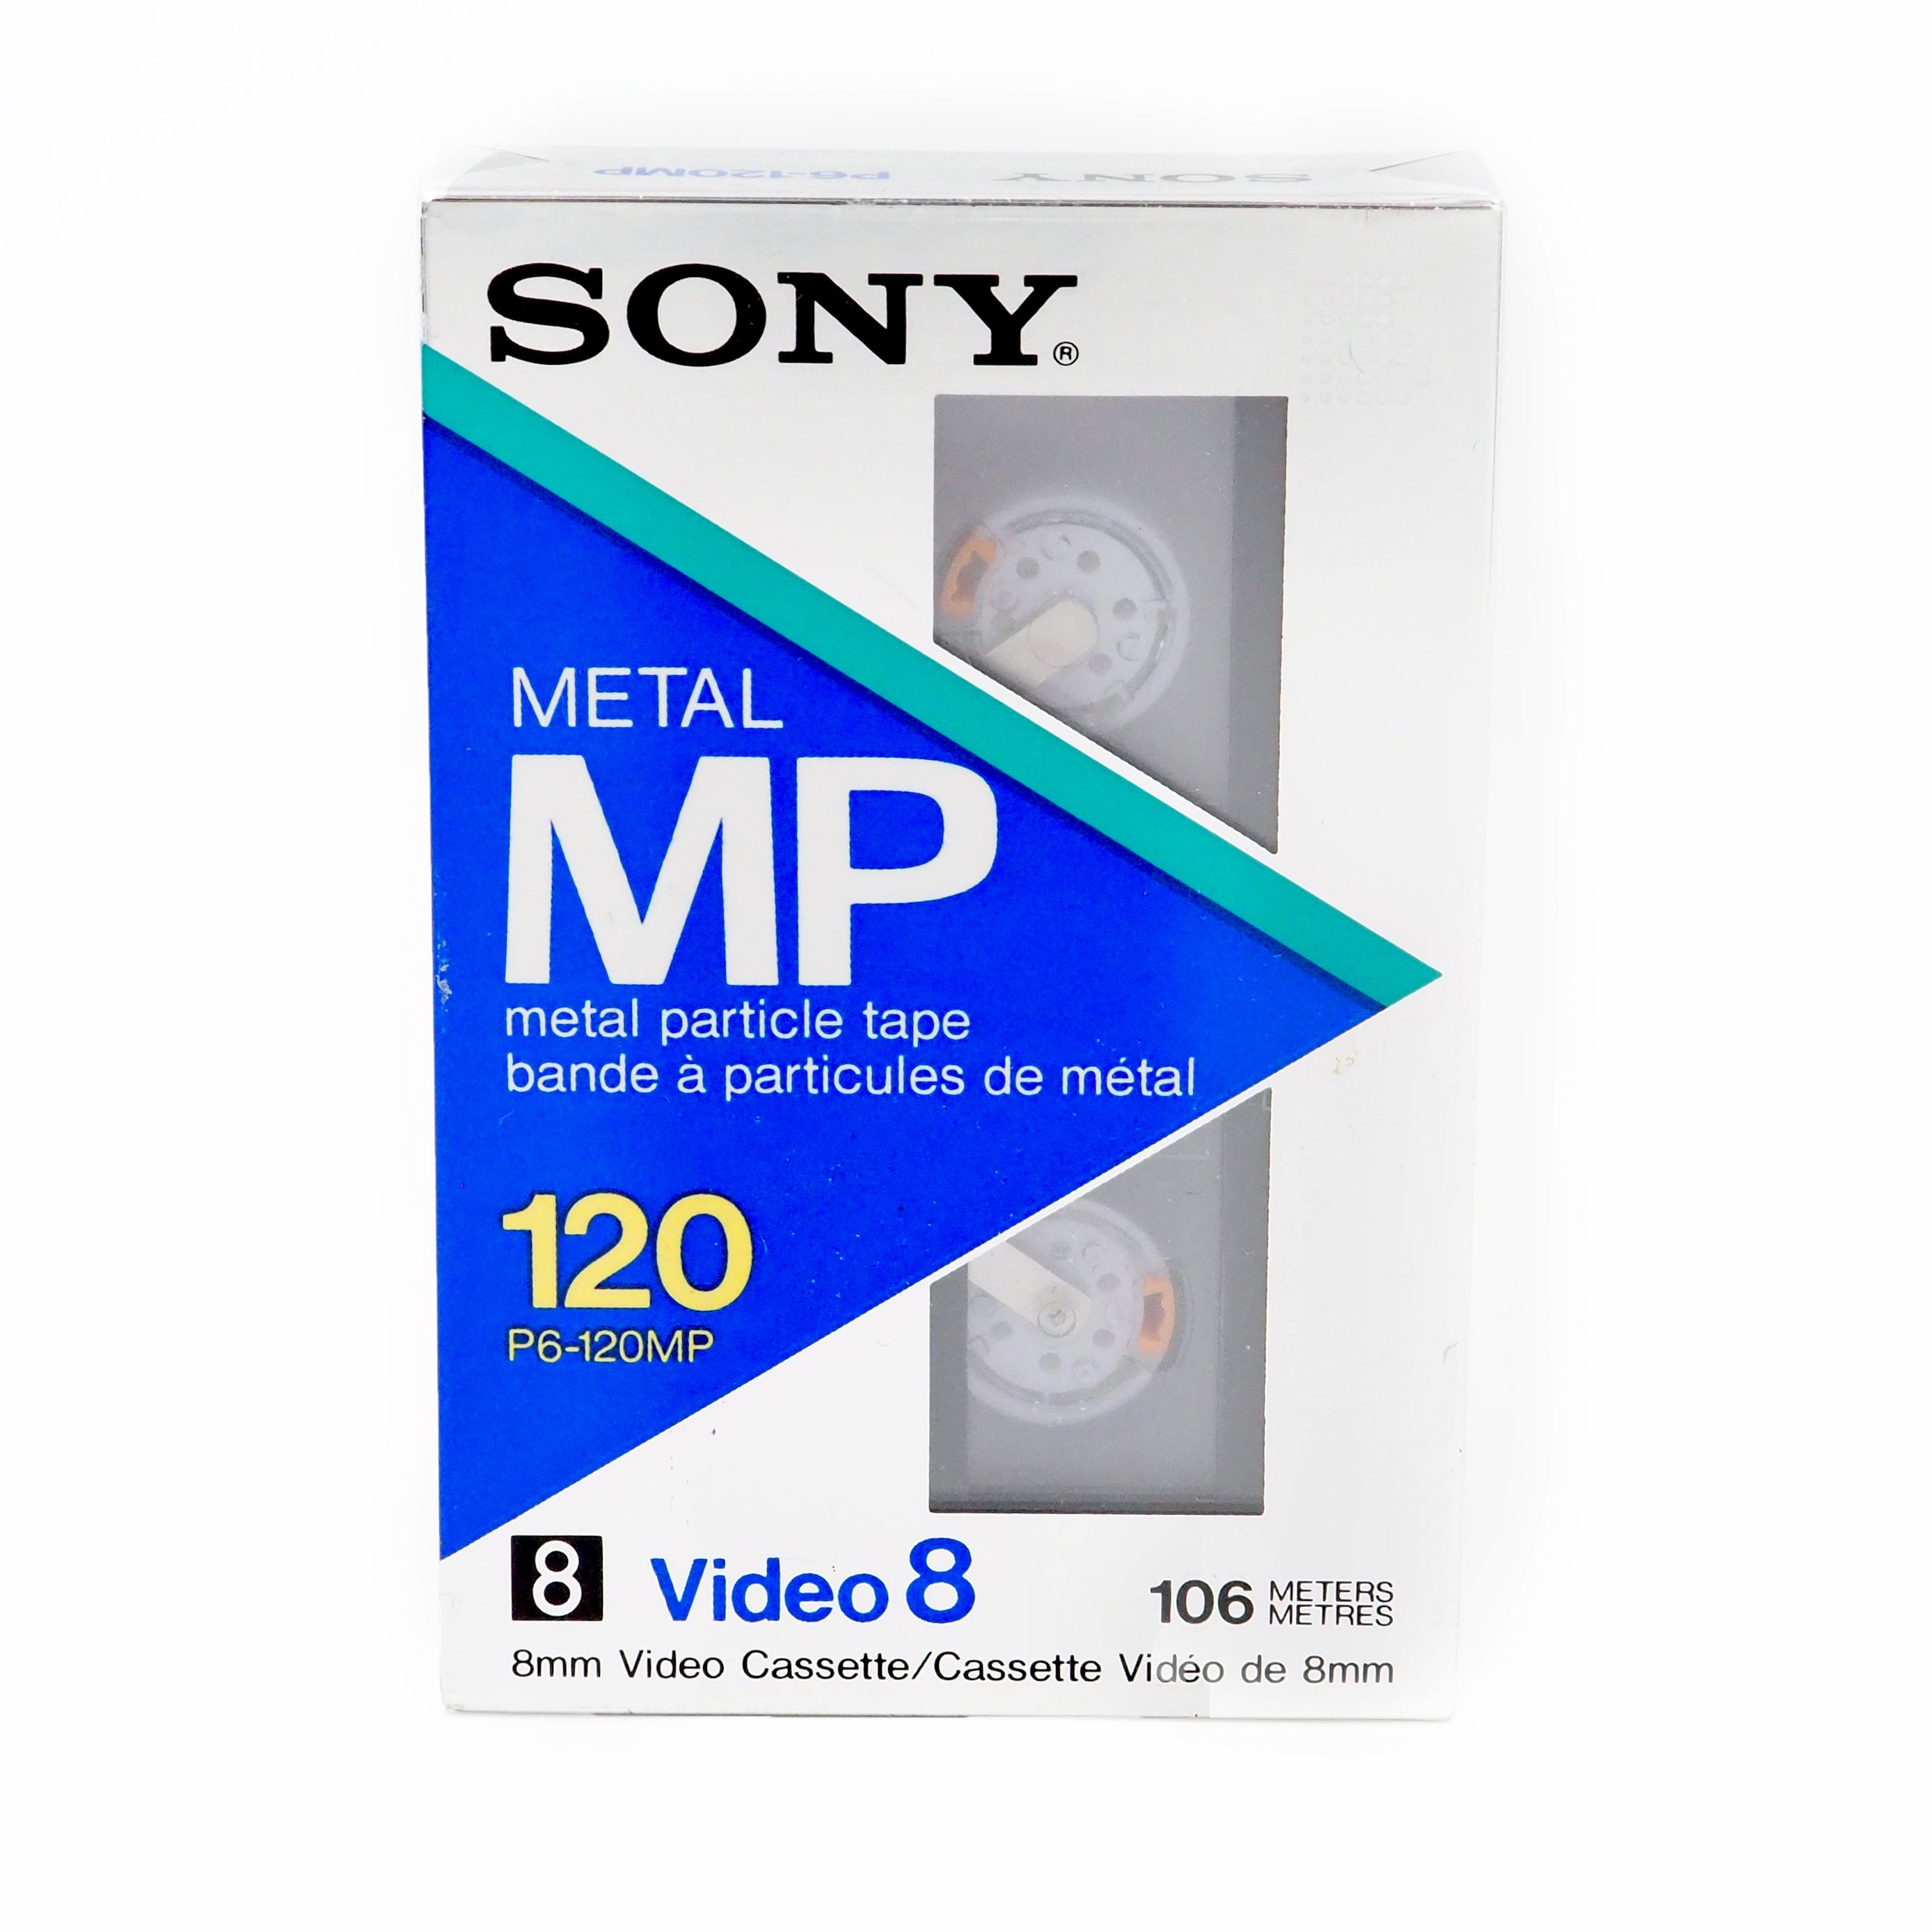 SONY 8mm video cassette